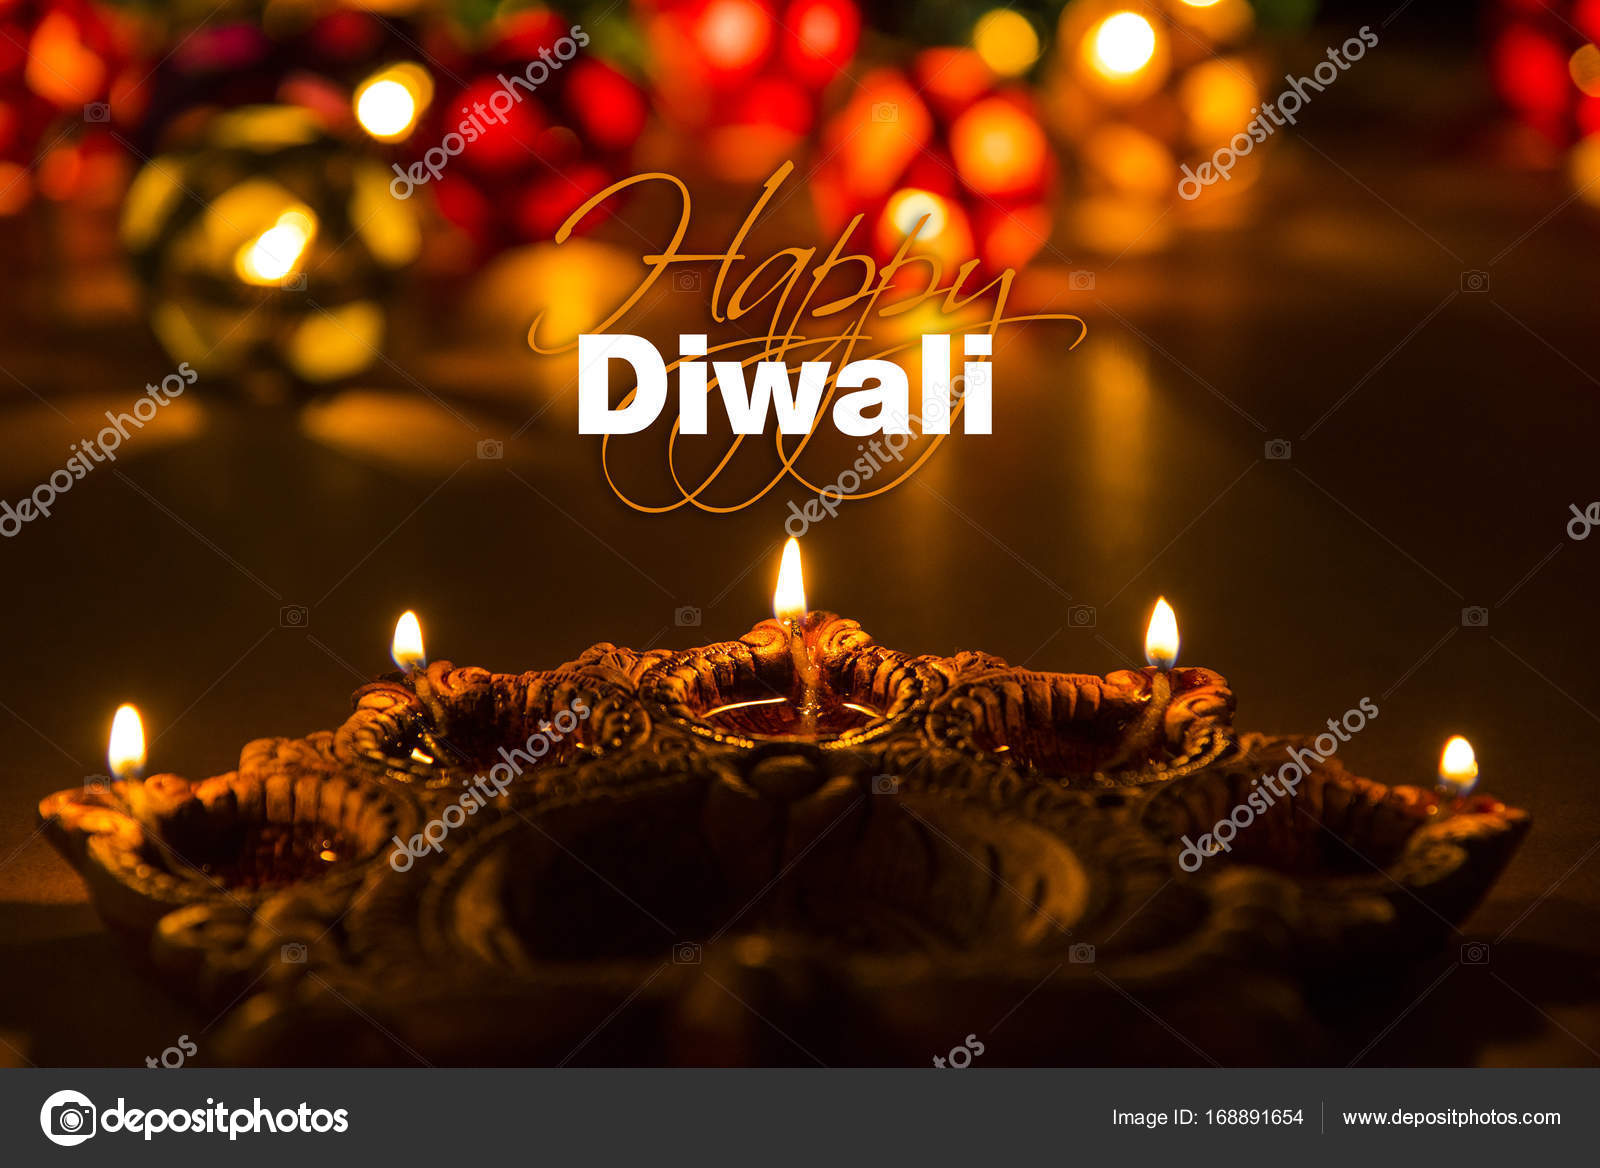 Stock photo of diwali greeting card showing illuminated diya or ...